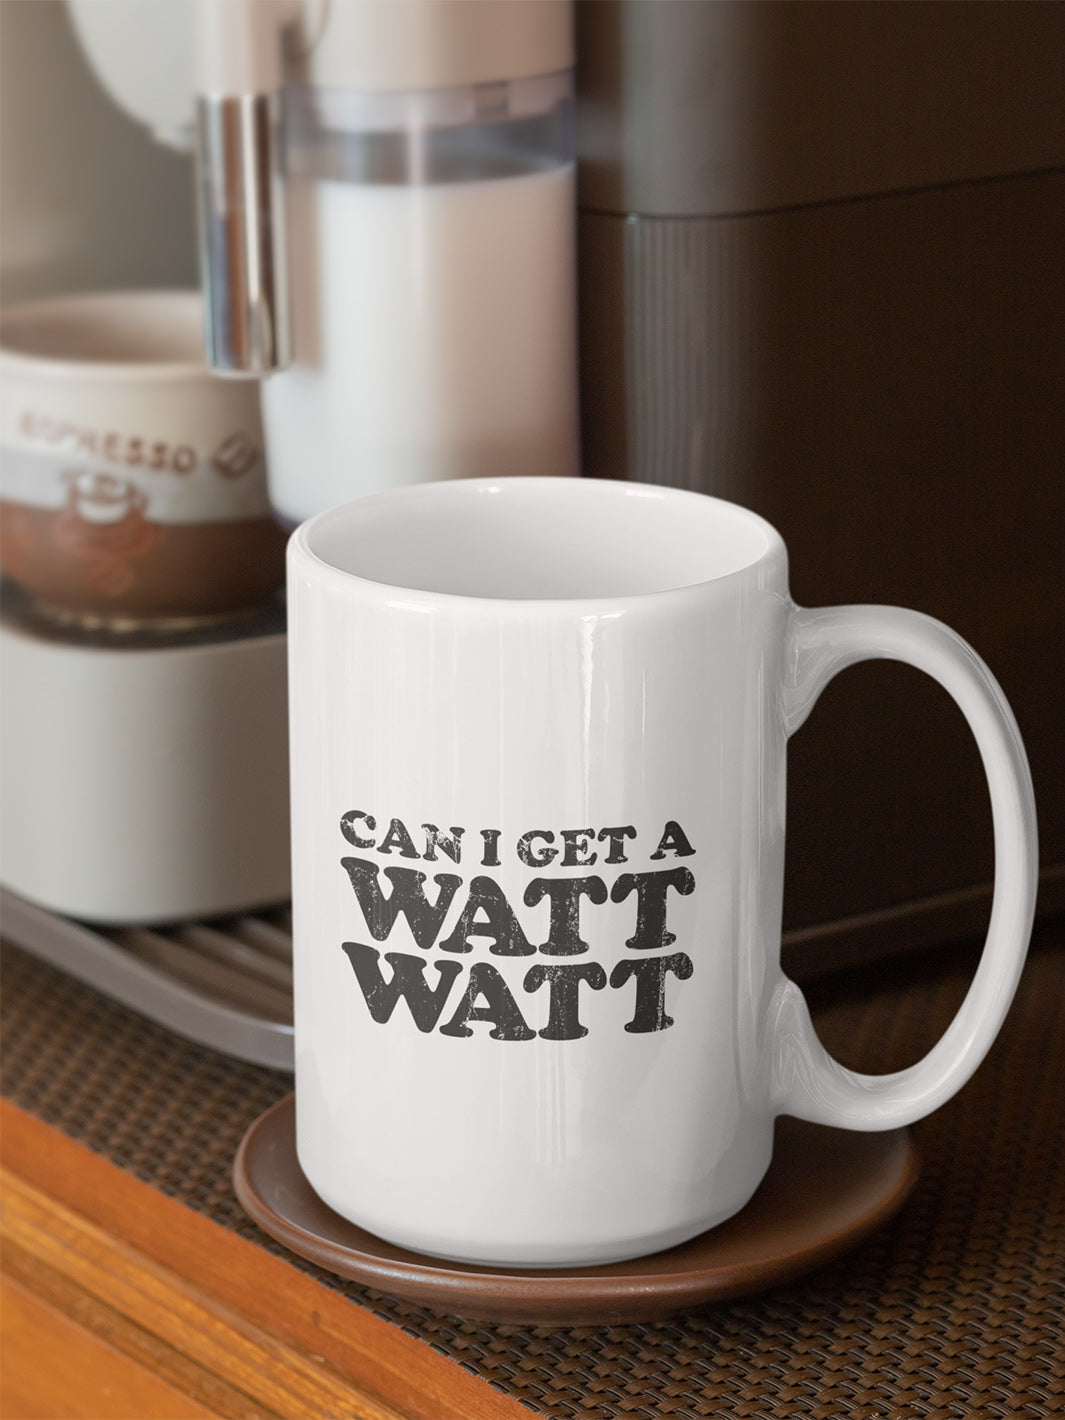 15 oz. white coffee mug that says "Can I Get A Watt Watt" in retro style all caps text